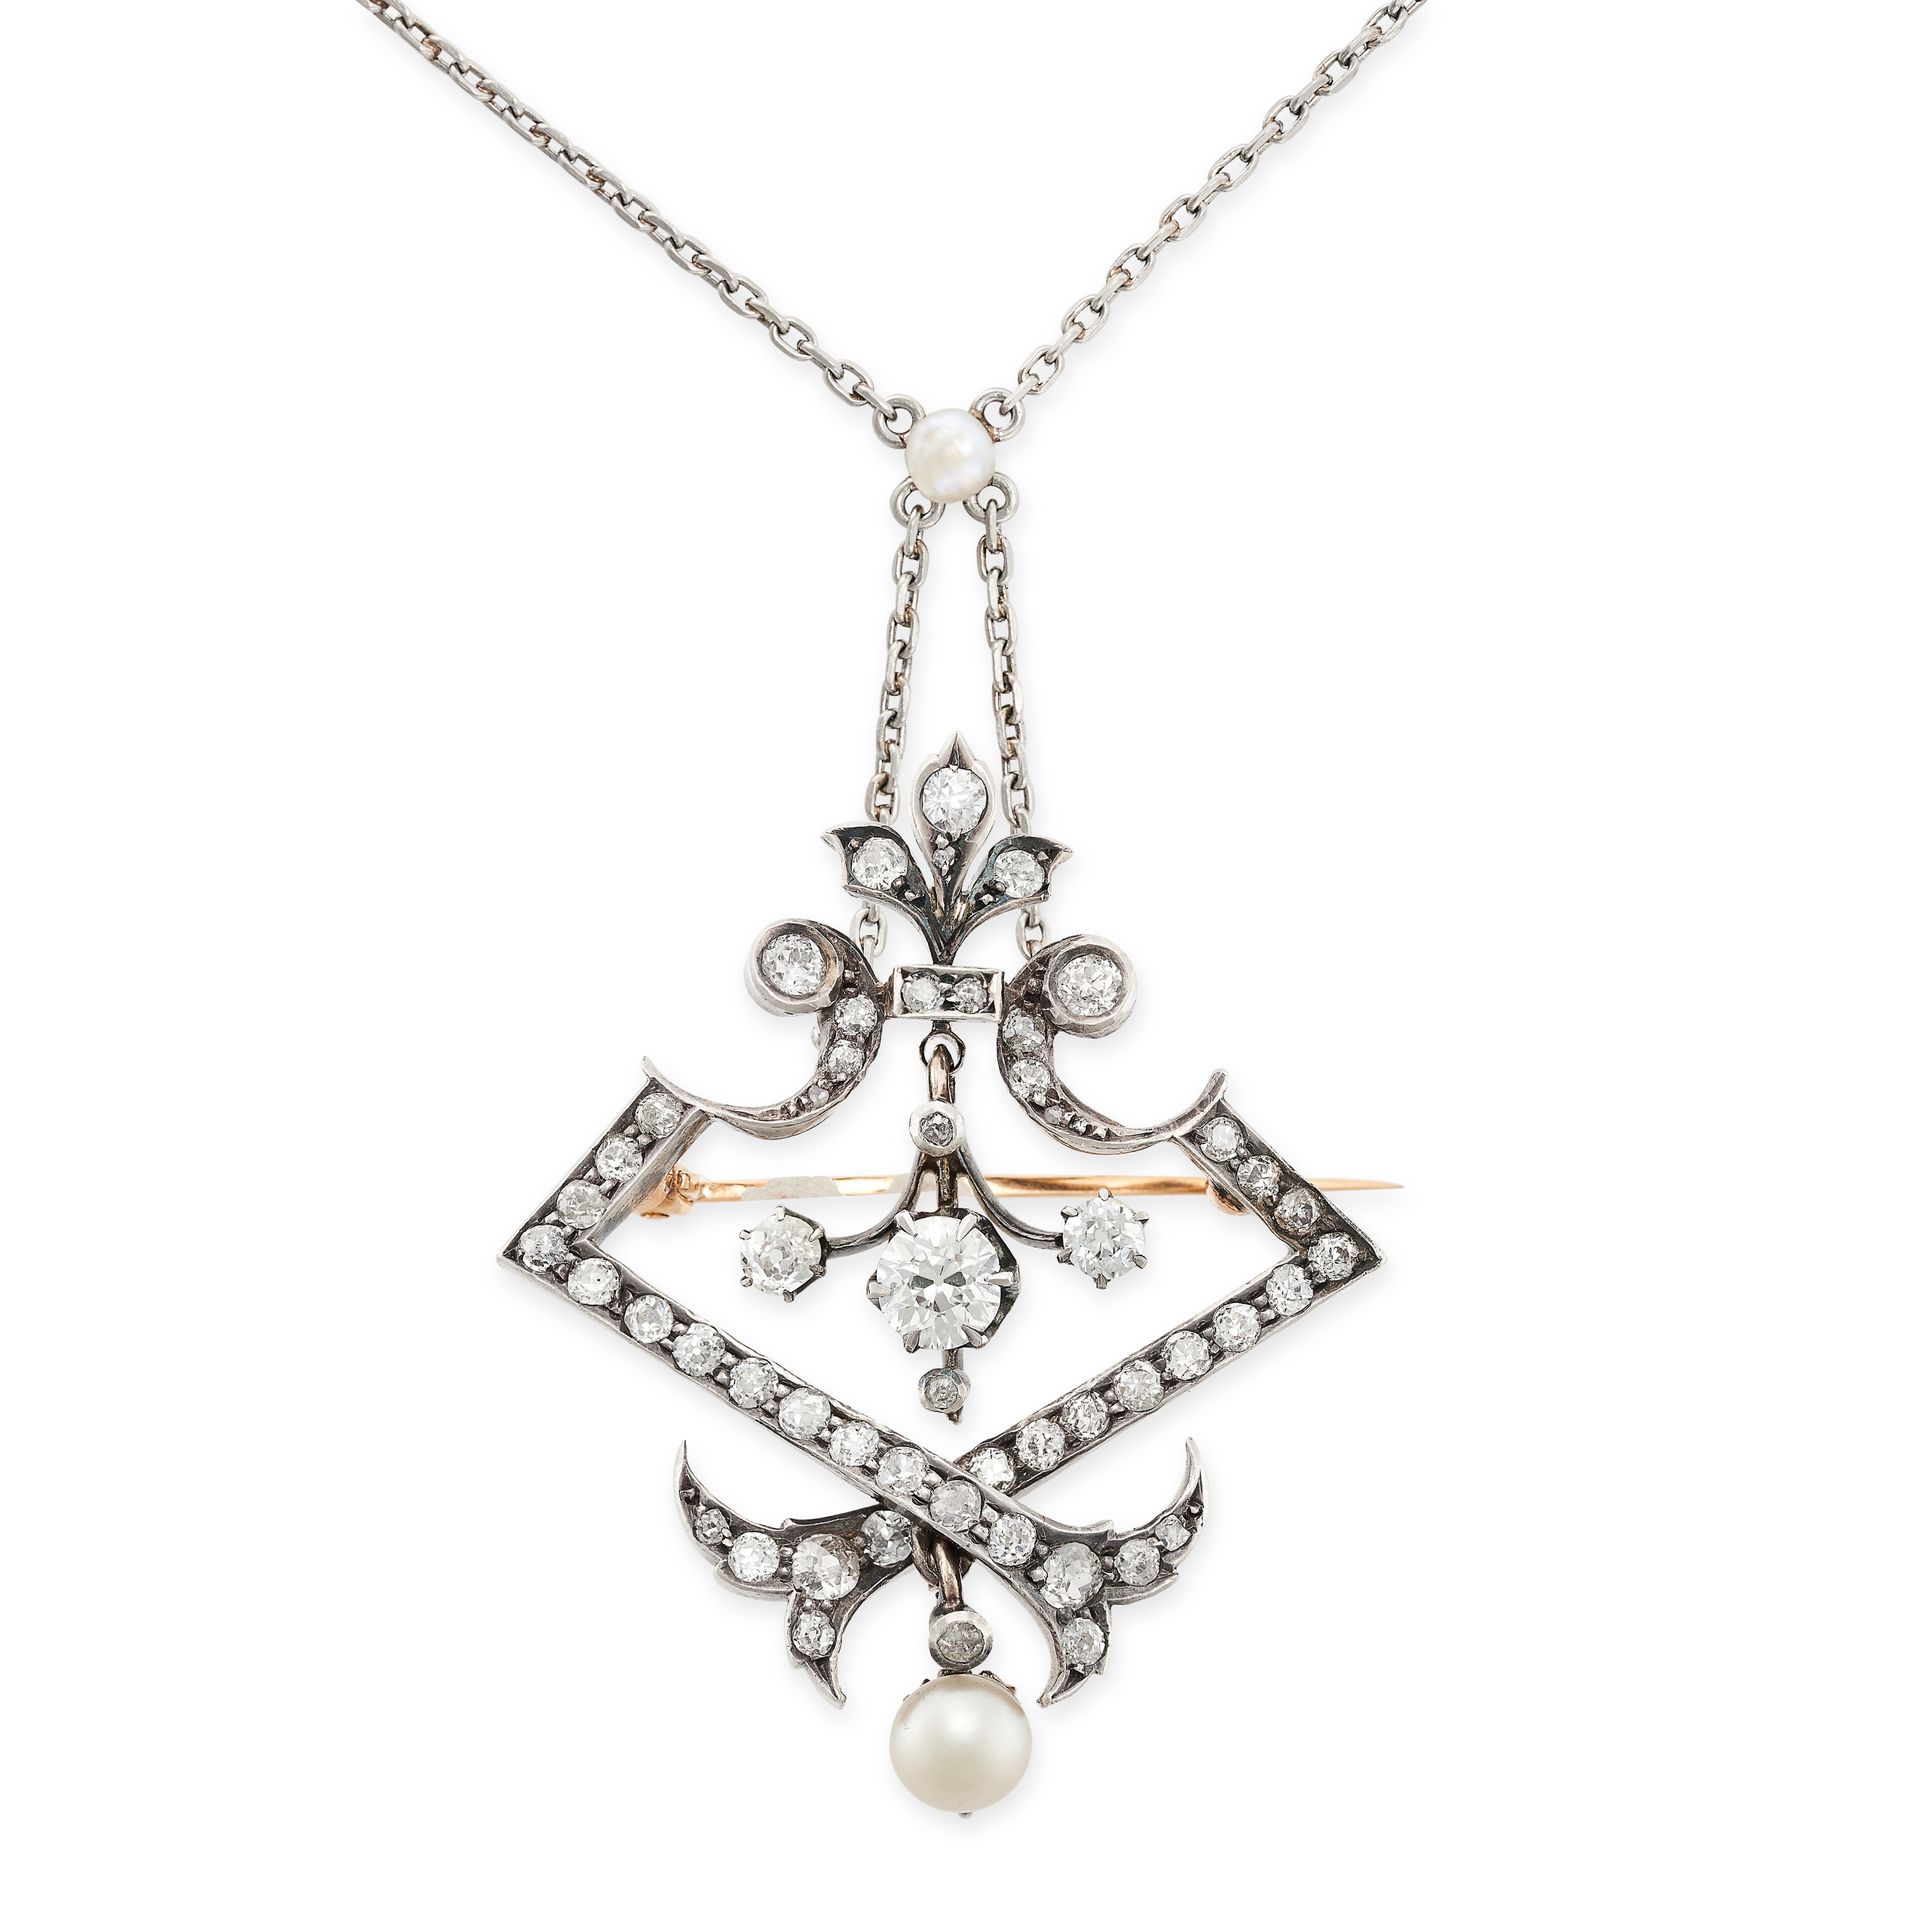 Null 古代钻石和珍珠项链及吊坠/胸针，链子上镶嵌着一颗珍珠，吊坠/胸针上镶嵌着老式切割钻石，中间有一个衔接的钻石坠，最后有一个珍珠坠，钻石共重约2.0-2.&hellip;